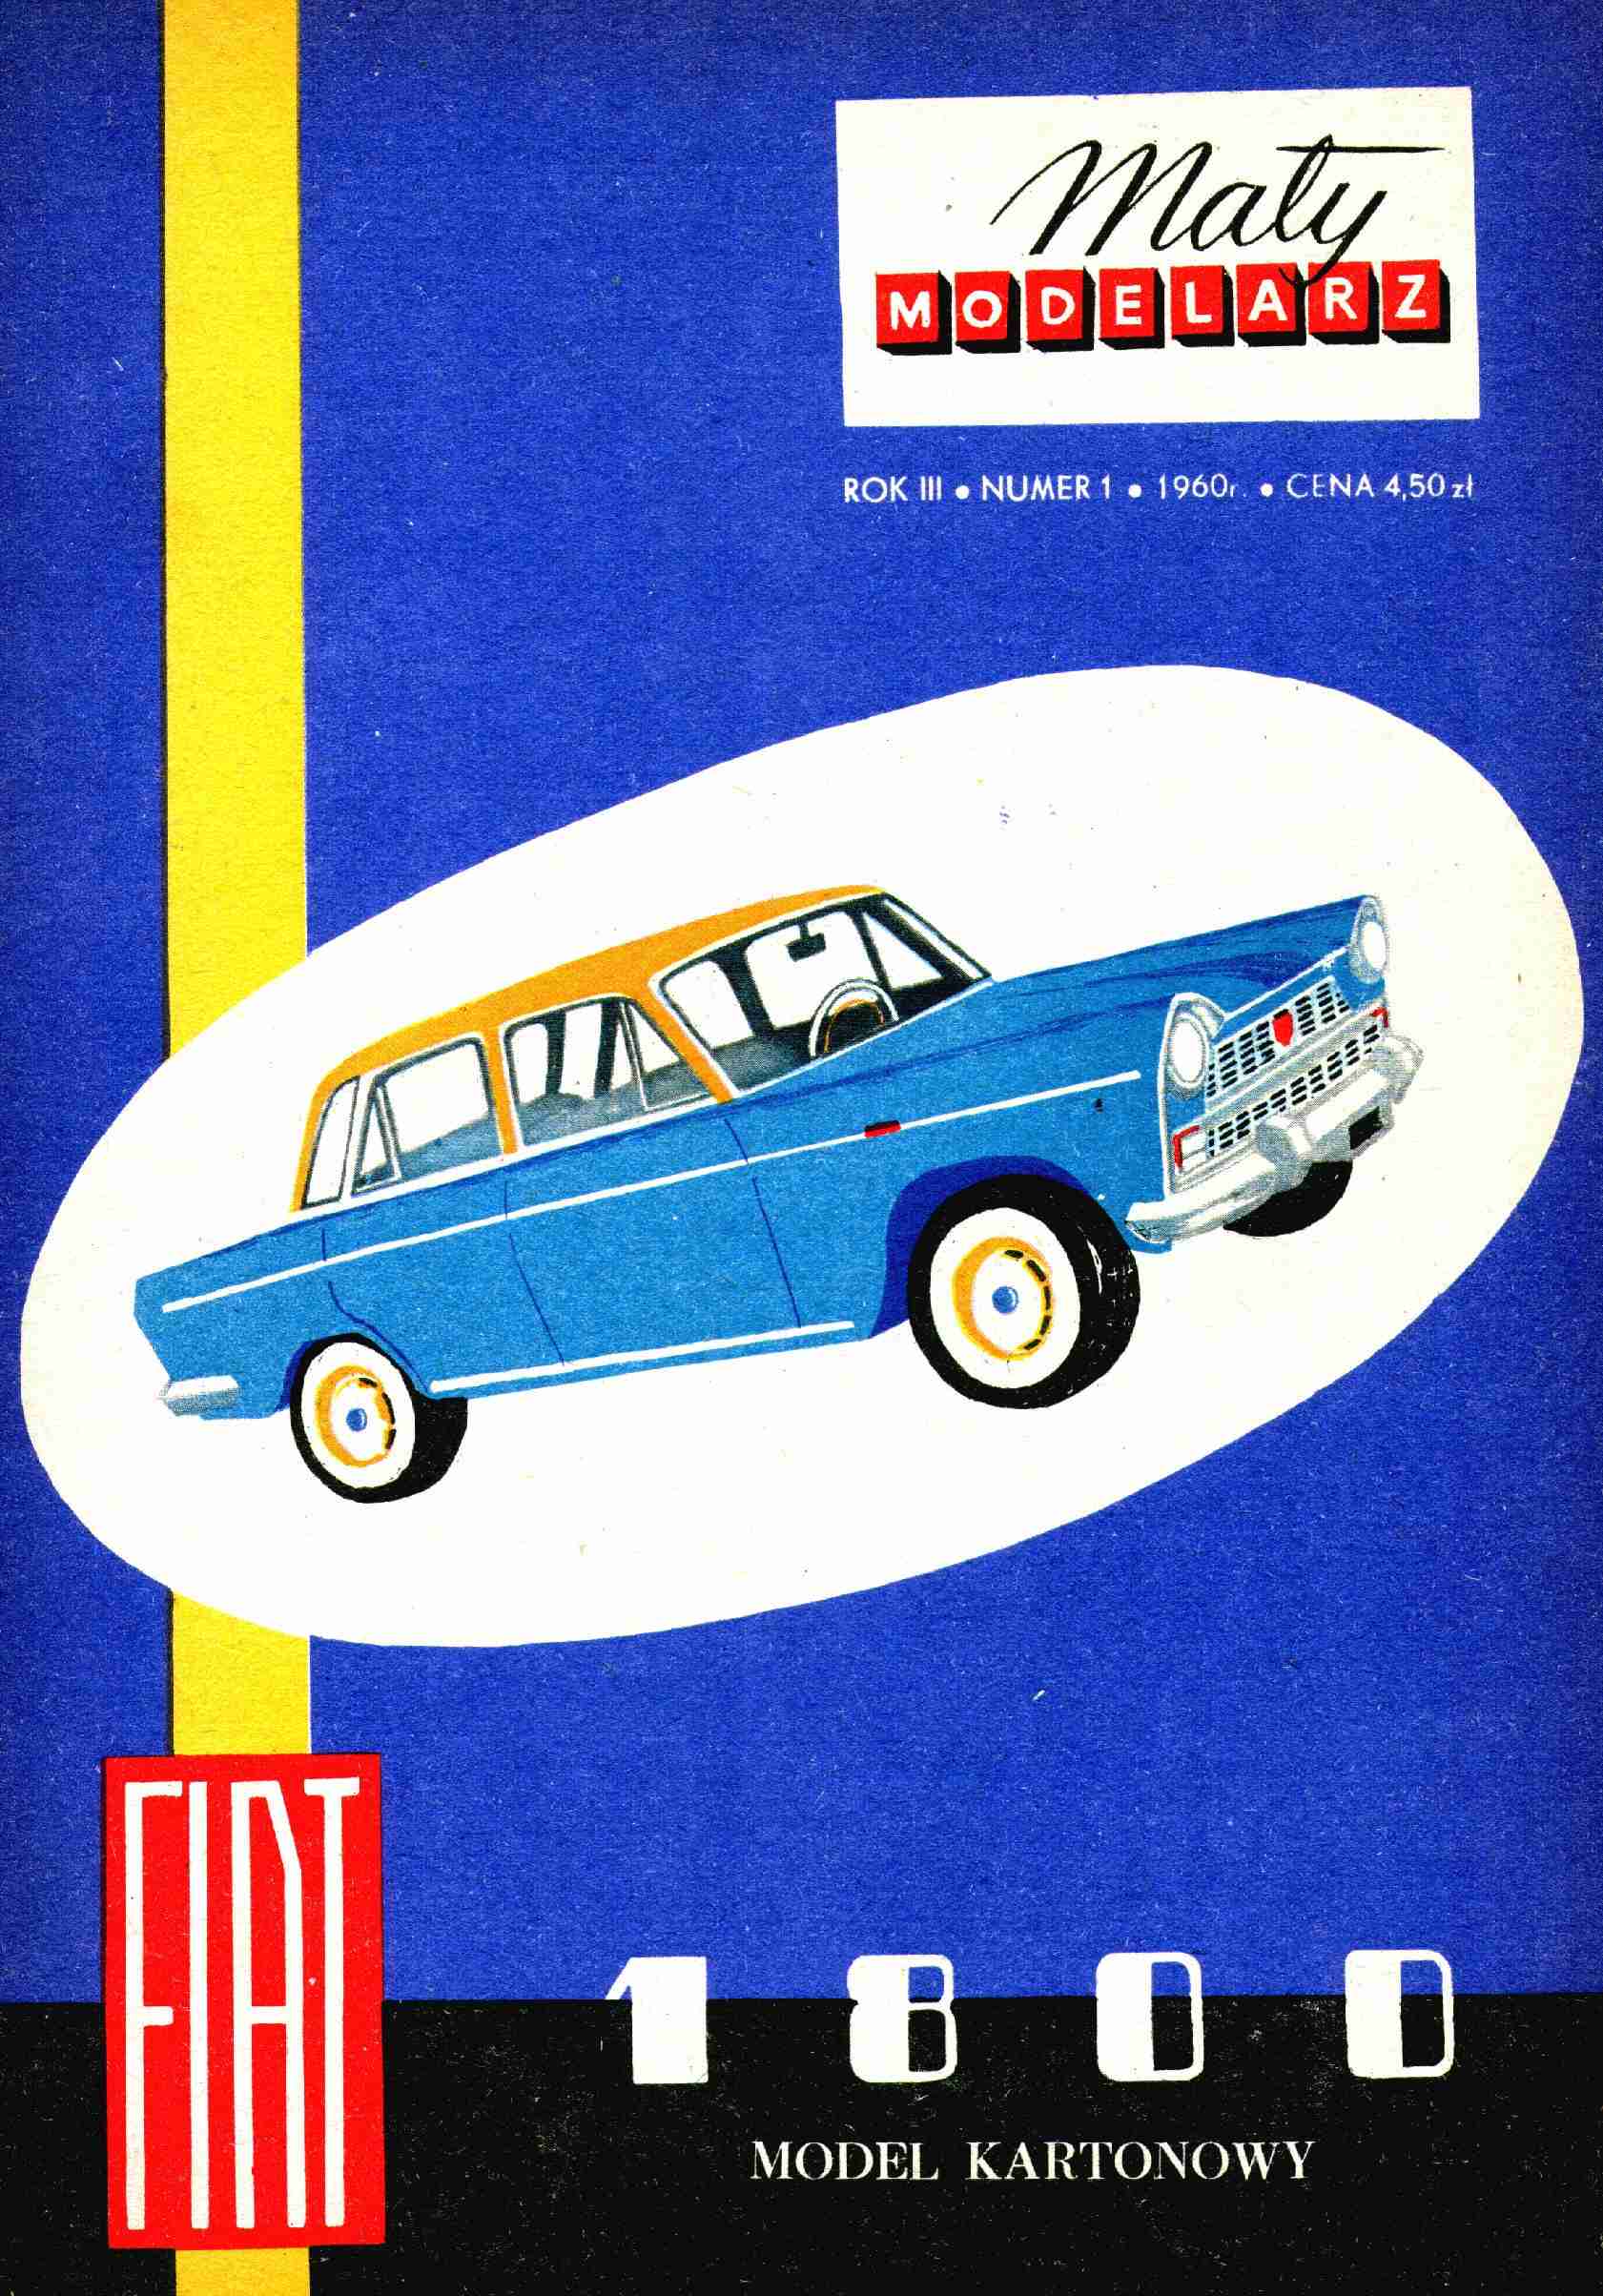 "Maly Modelarz" 1, 1960